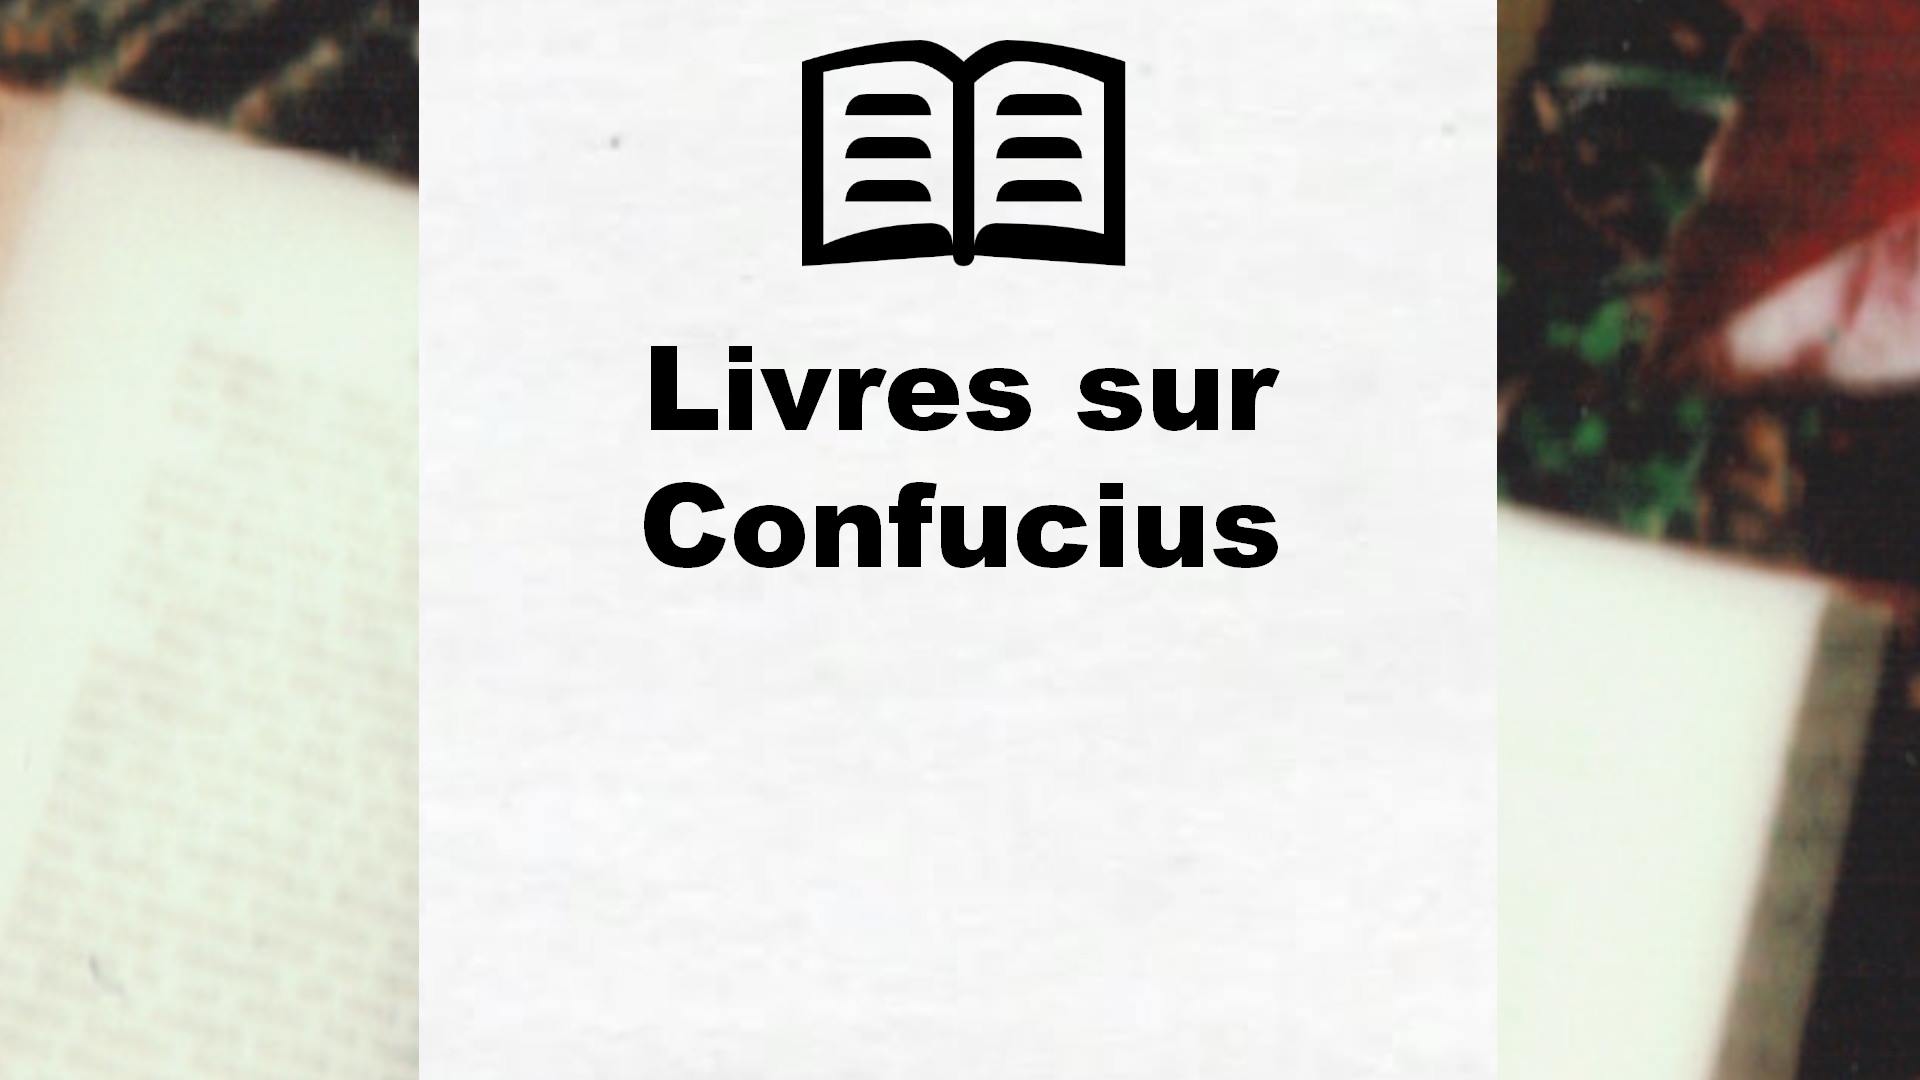 Livres sur Confucius